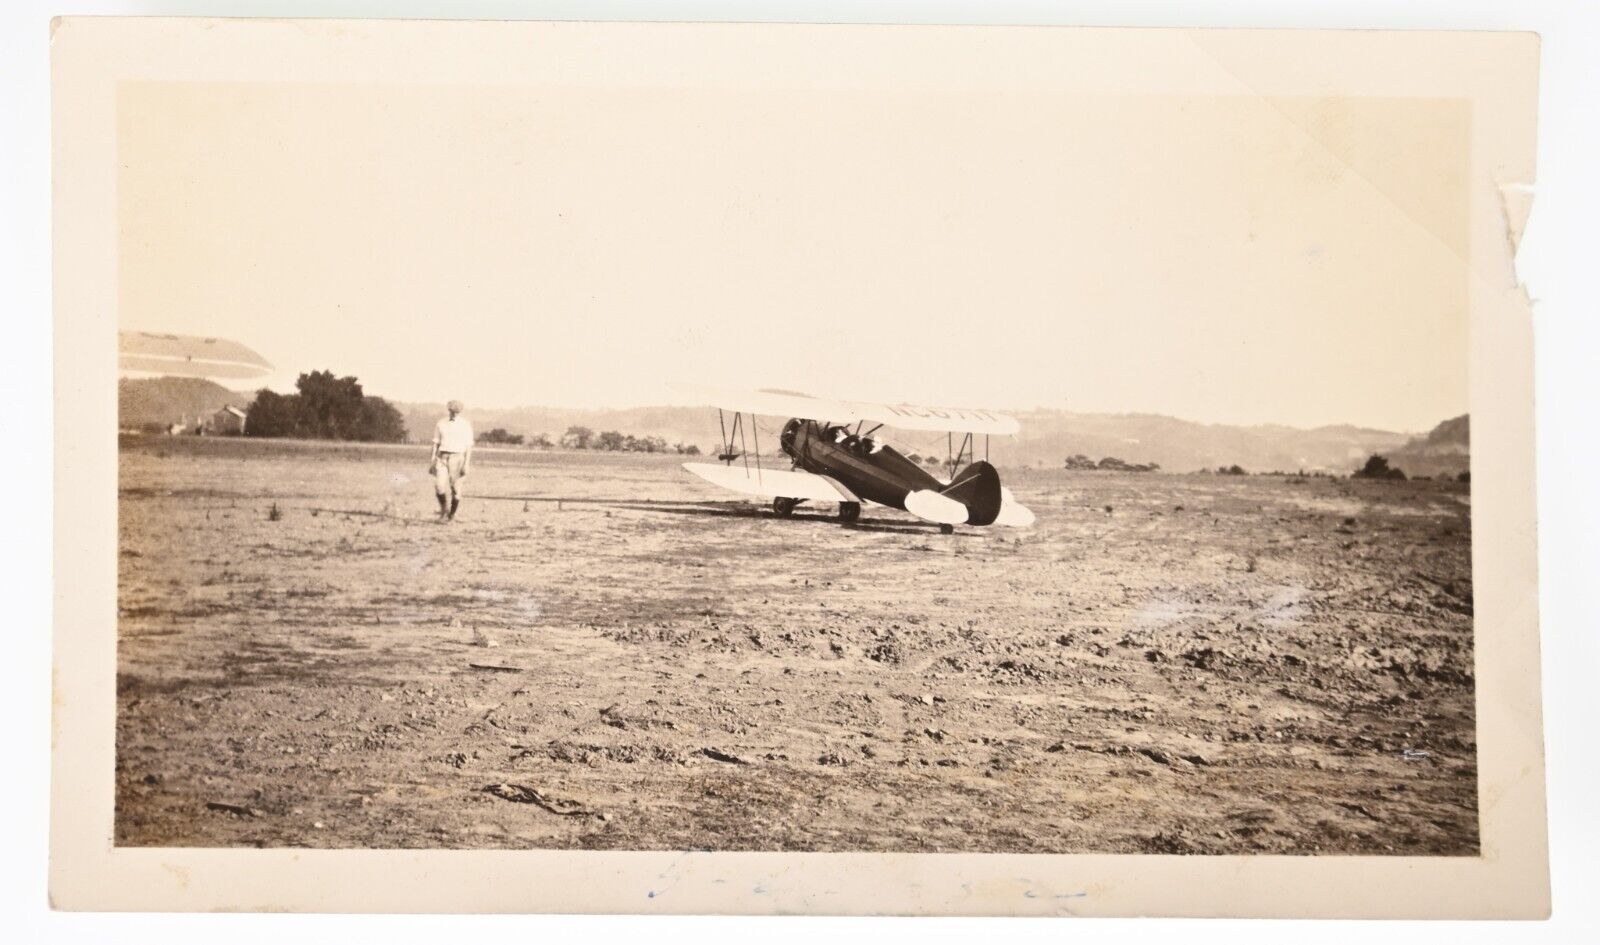 VINTAGE B&W SNAPSHOT 1932 SMALL BI-PLANE PILOT TAKING OFF IN DIRT FIELD